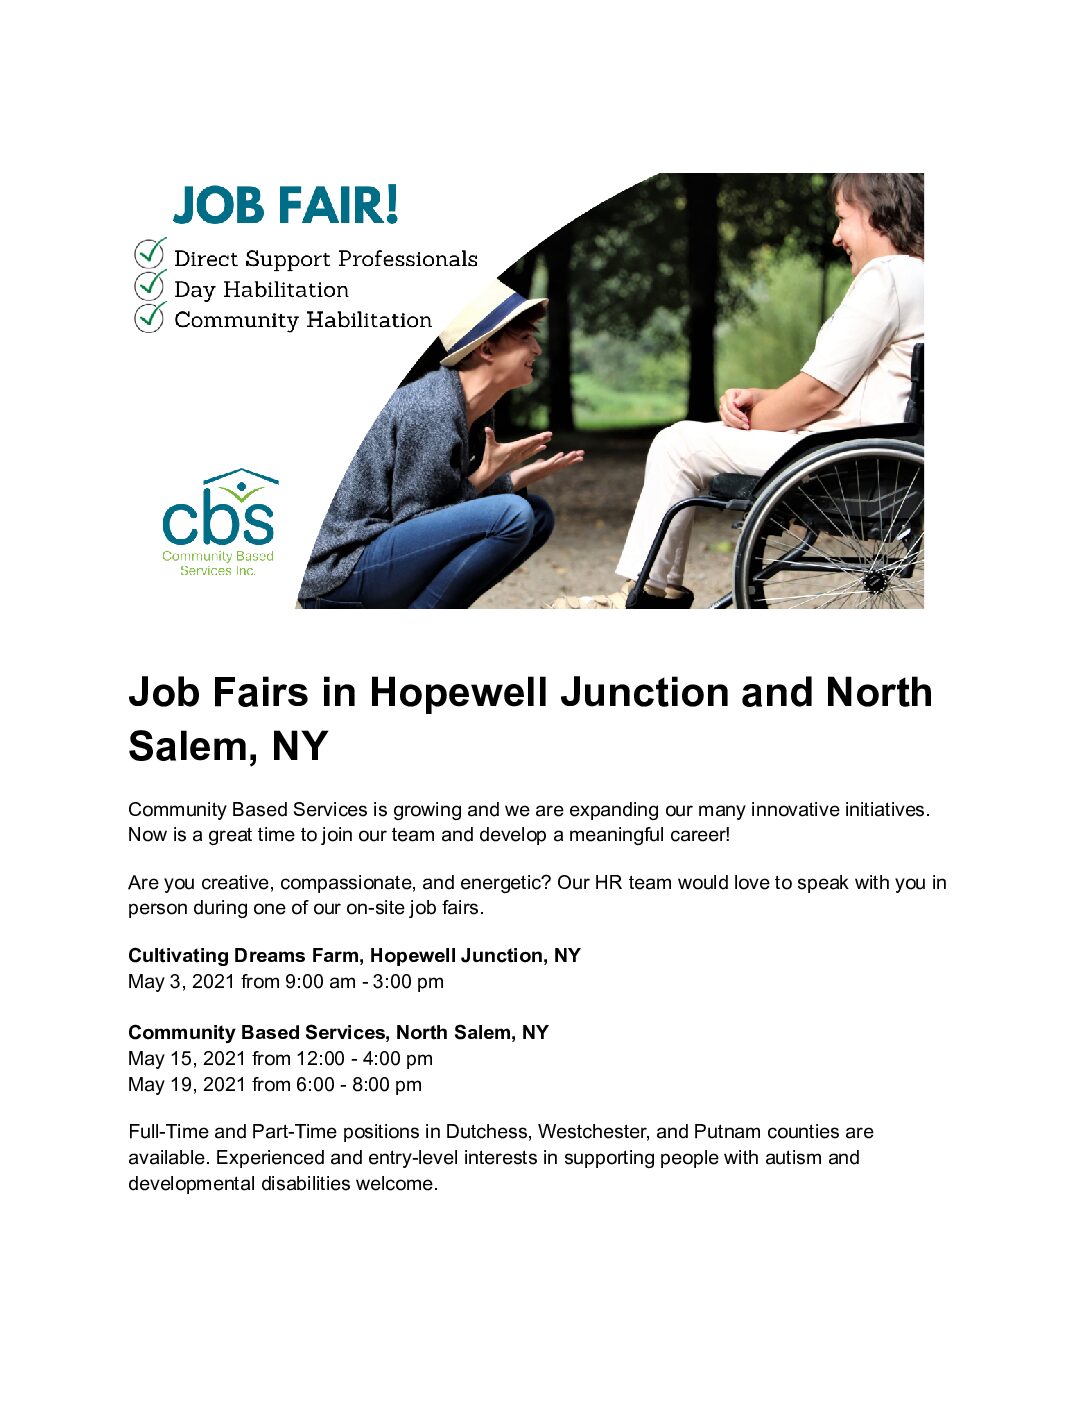 Job Fair at Community Based Services